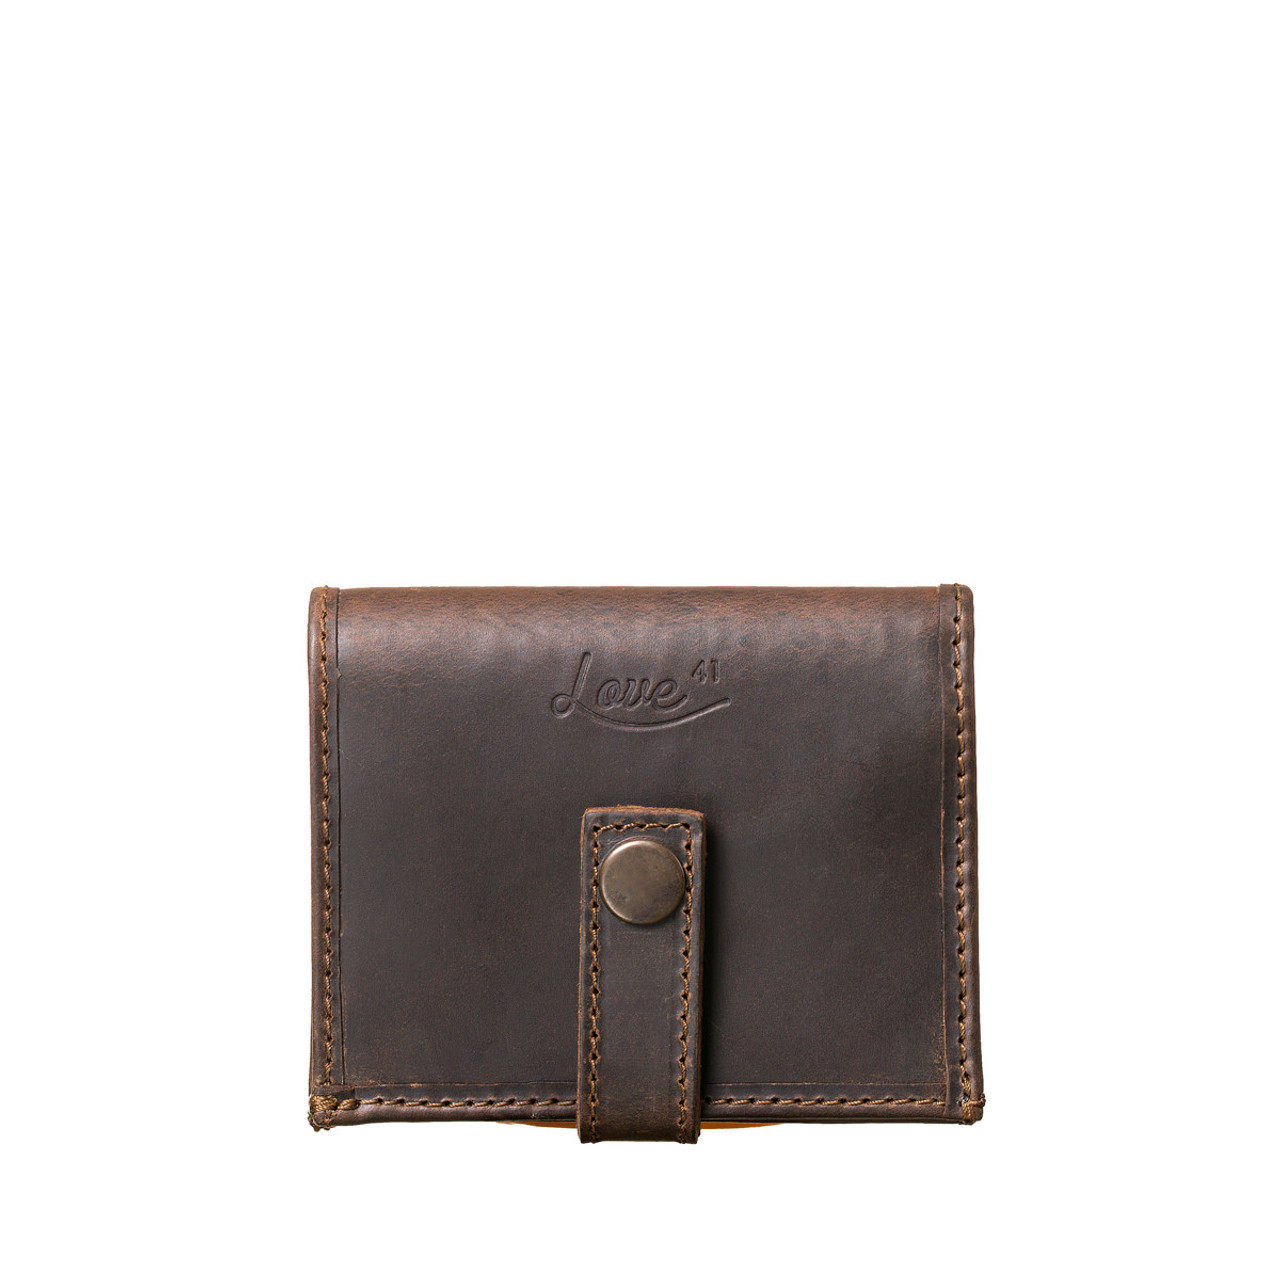 Designer Women's Cool Clutch Leather Wallet